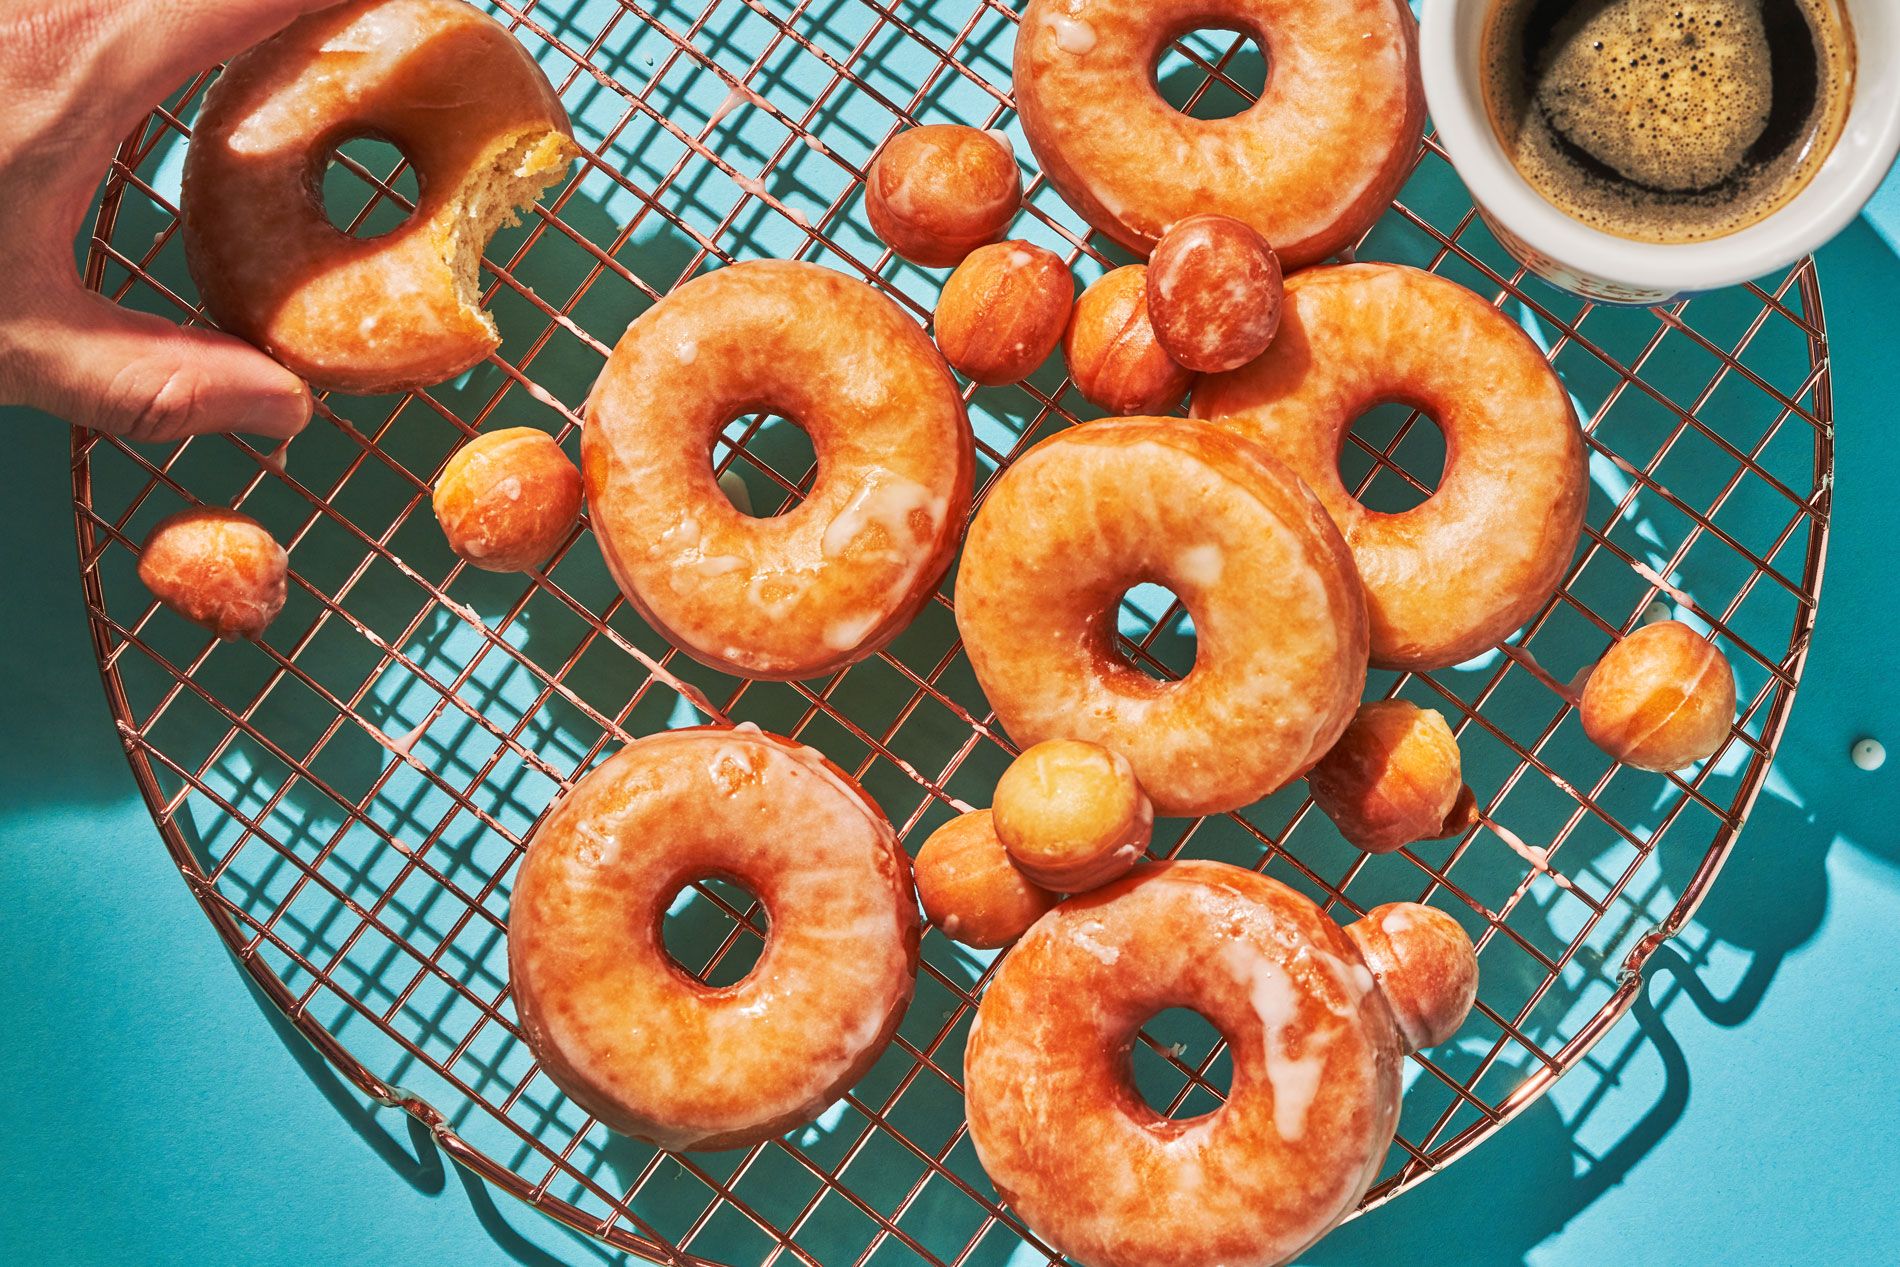 How to Make Donuts at Home - Homemade Doughnuts Recipe image